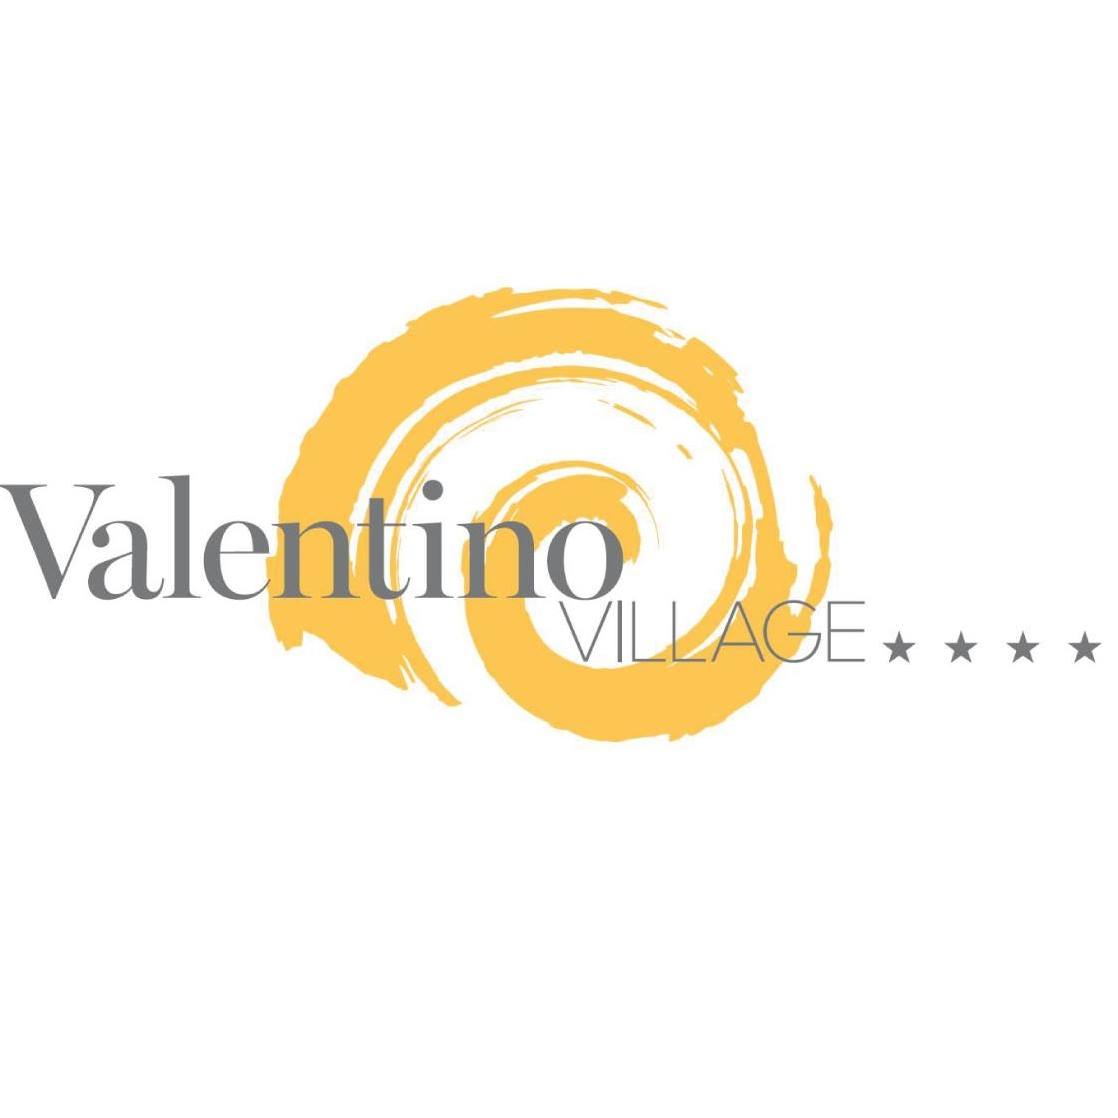 Image result for VALENTINO VILLAGE